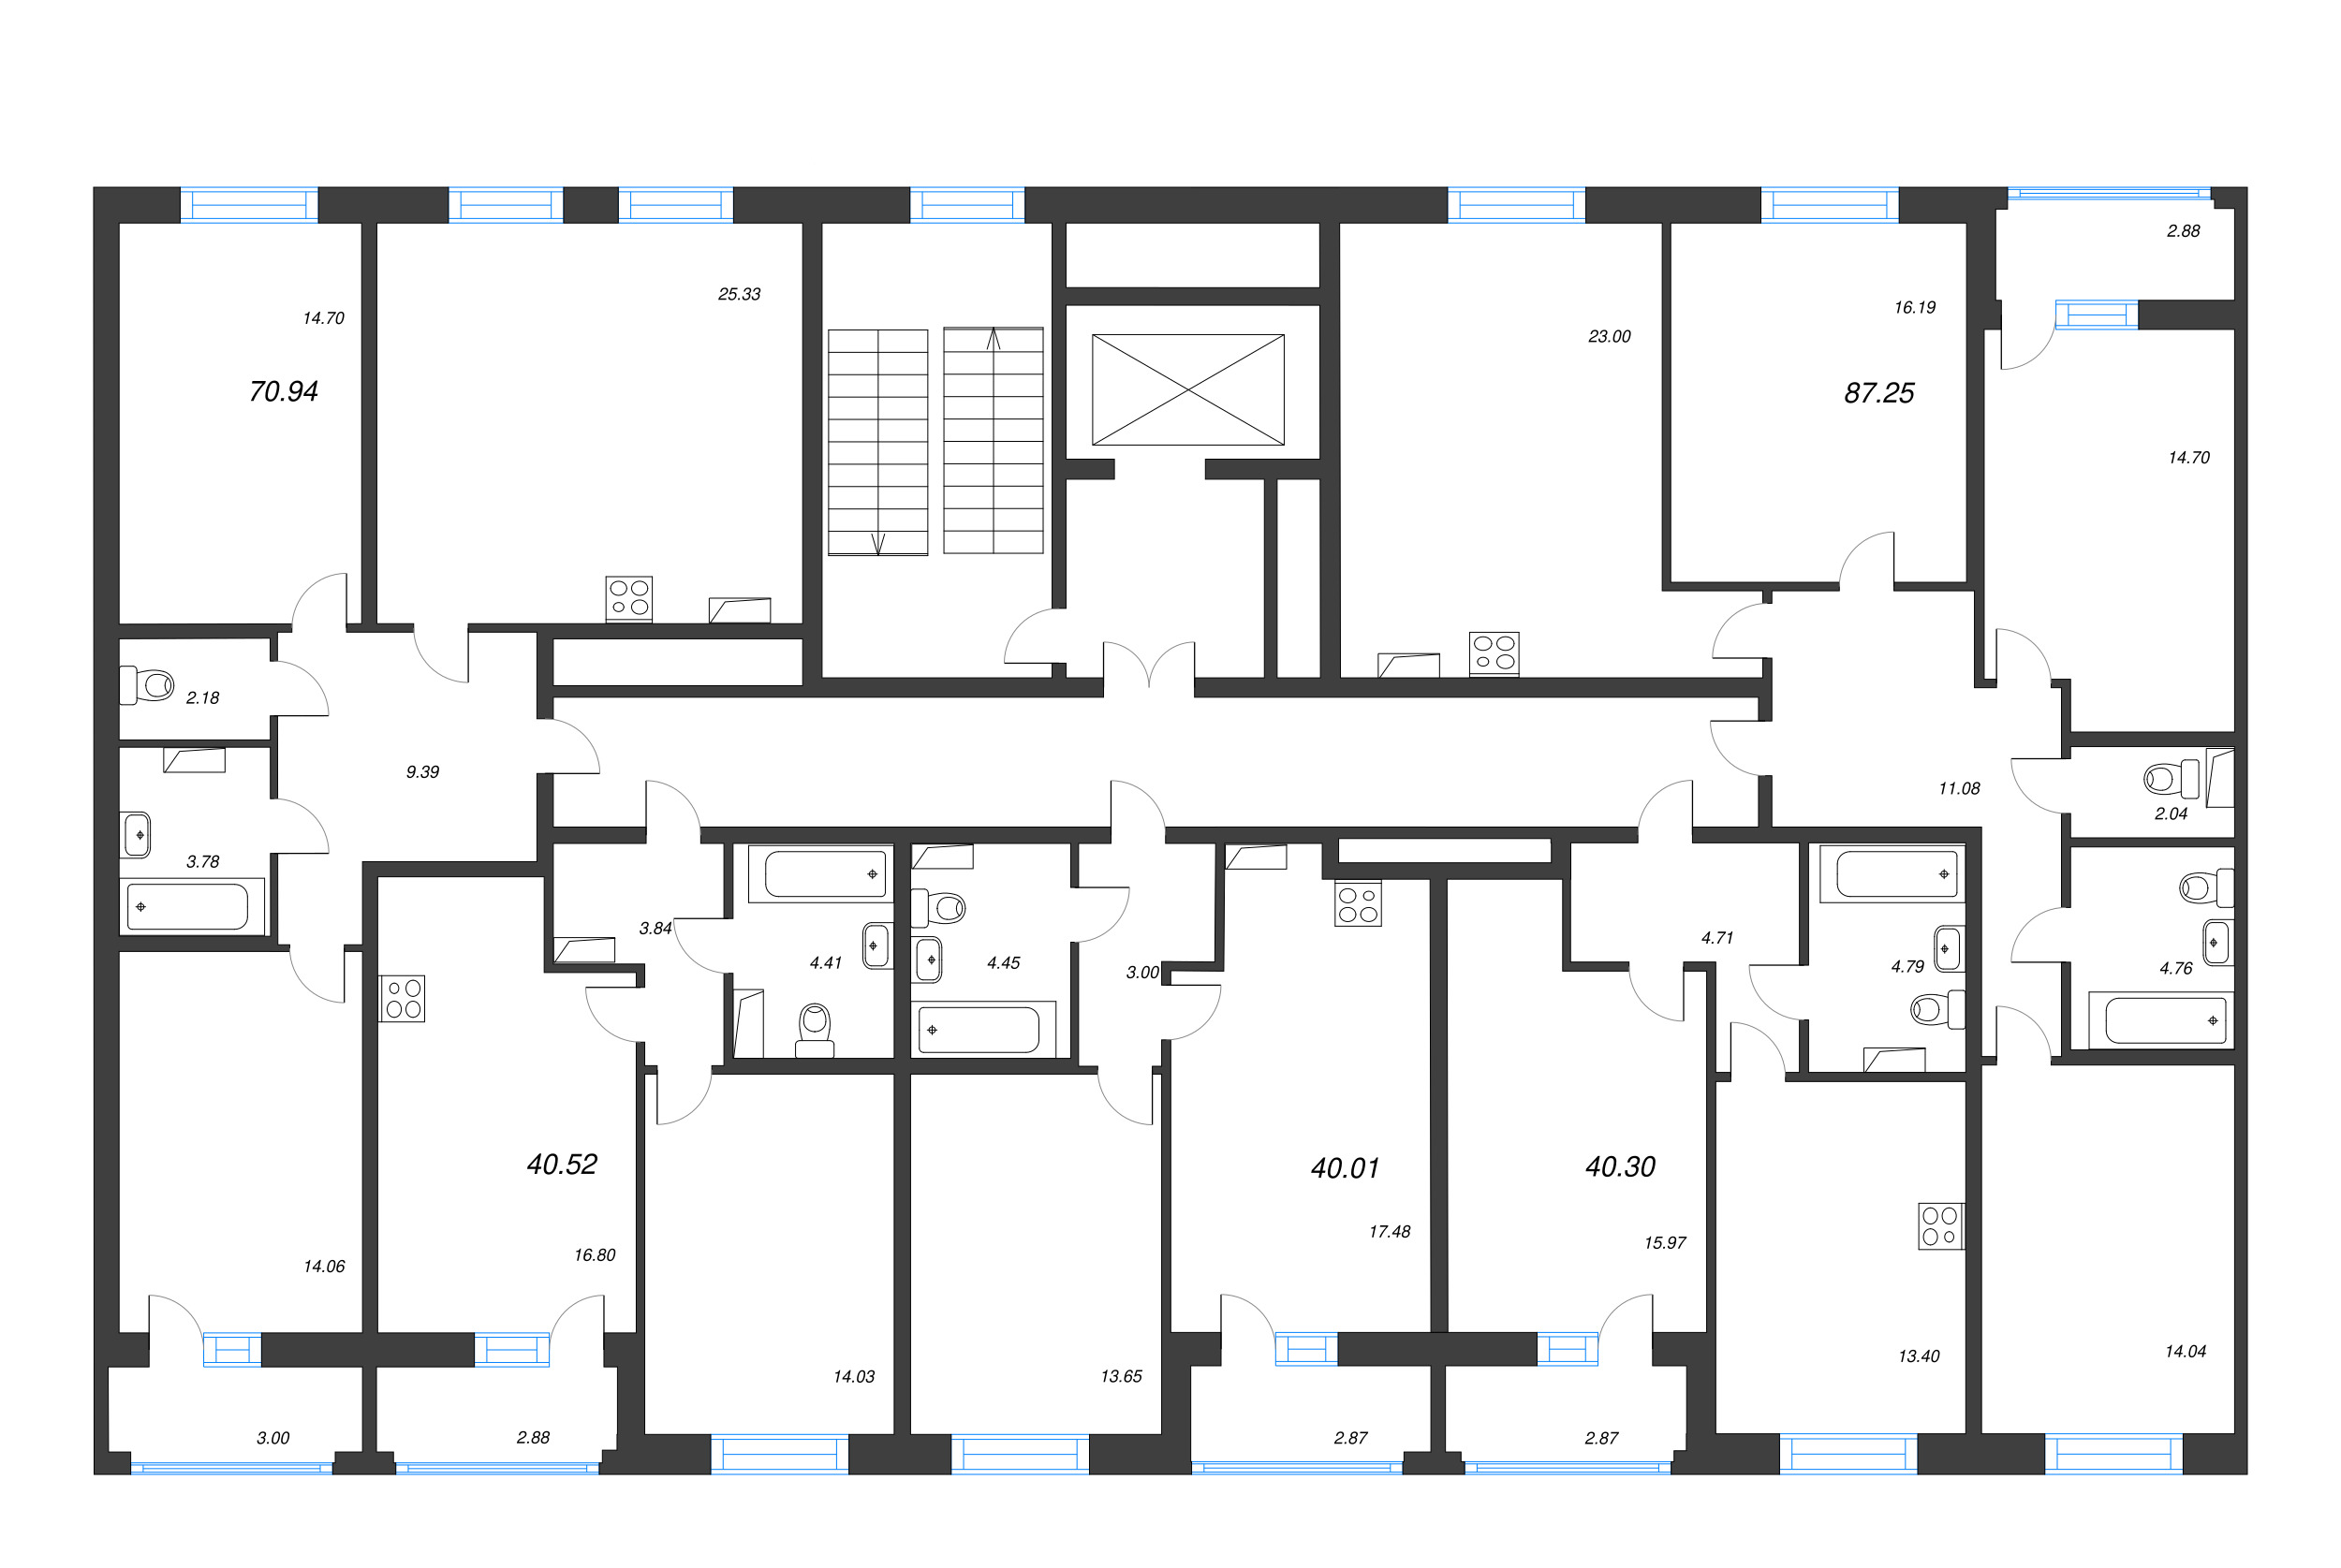 4-комнатная (Евро) квартира, 87.25 м² - планировка этажа